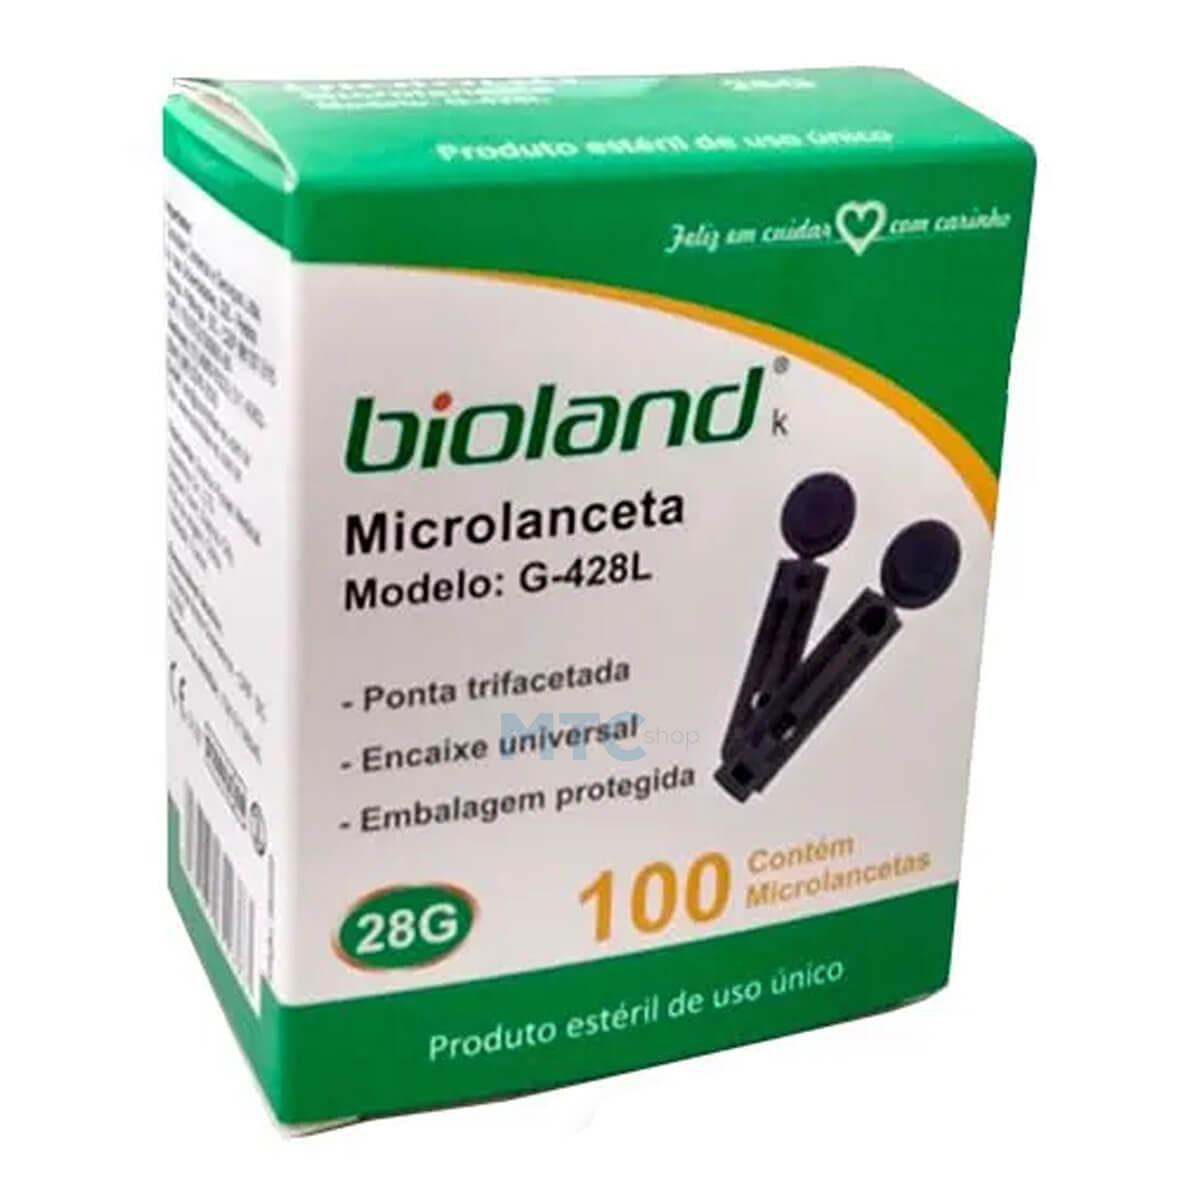 Microlanceta G-428L - Bioland